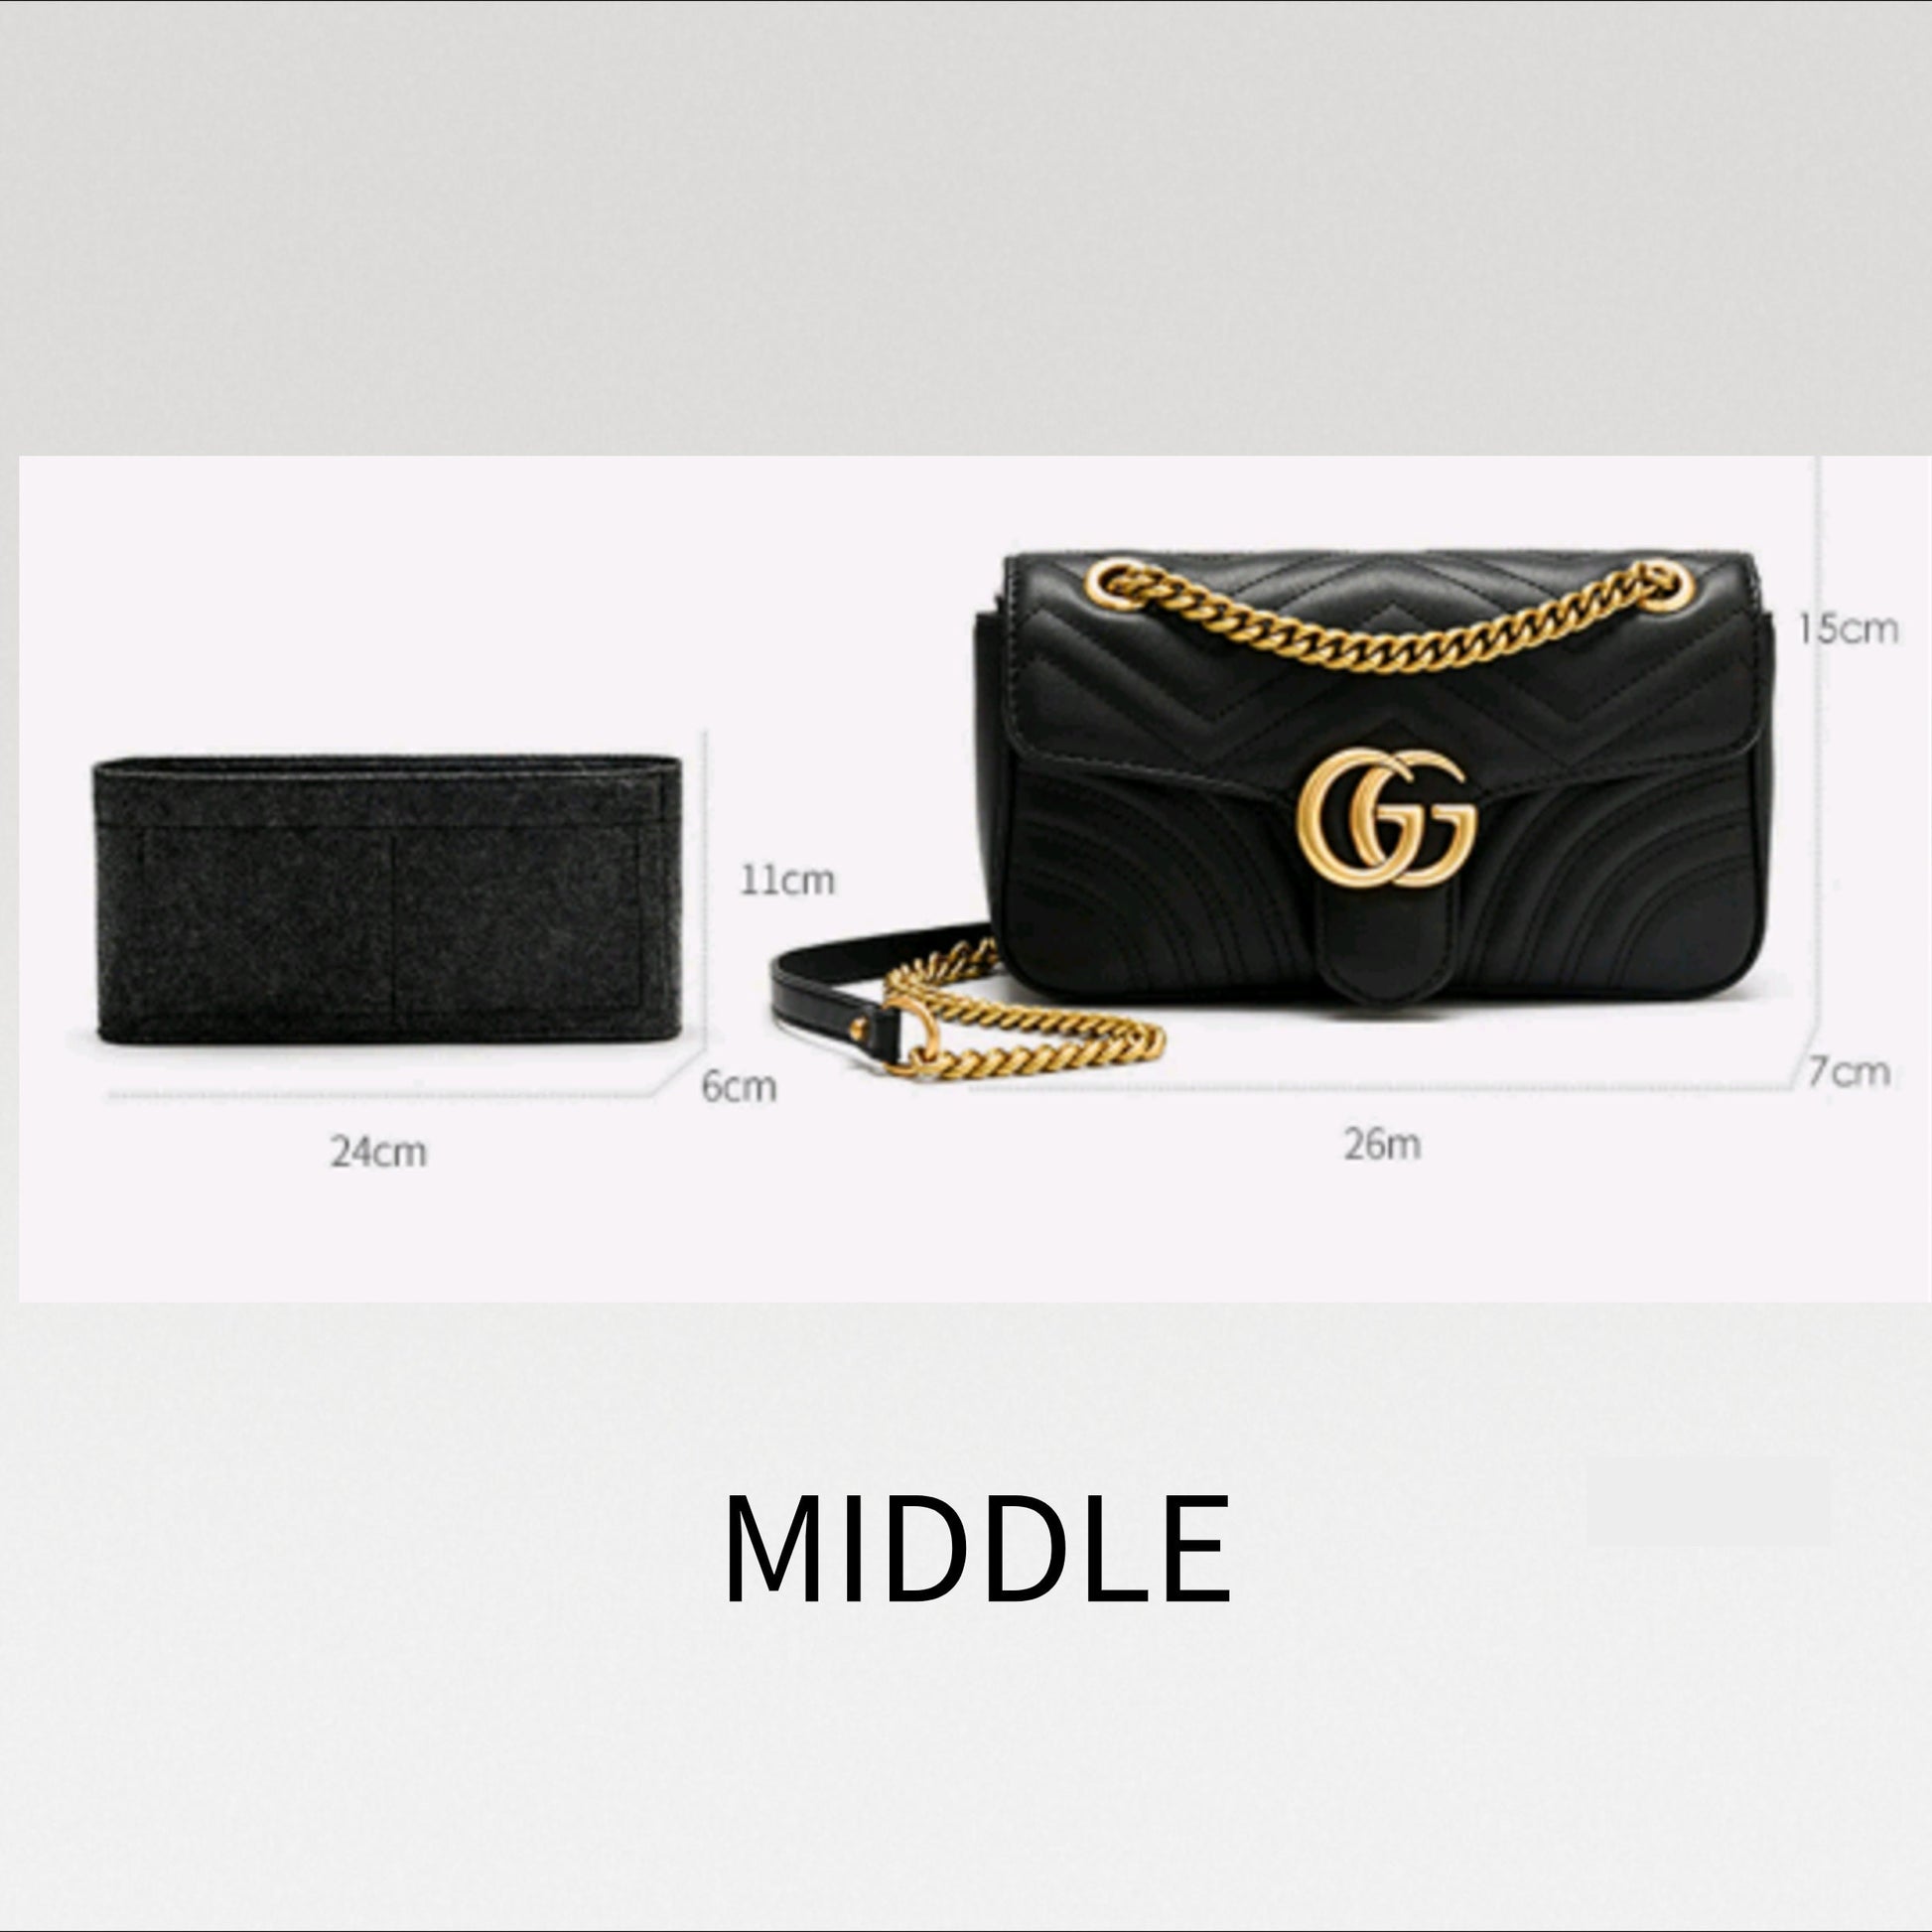 Gucci Marmont Bag Models Organizer Insert, Classic Model Bag Organizer